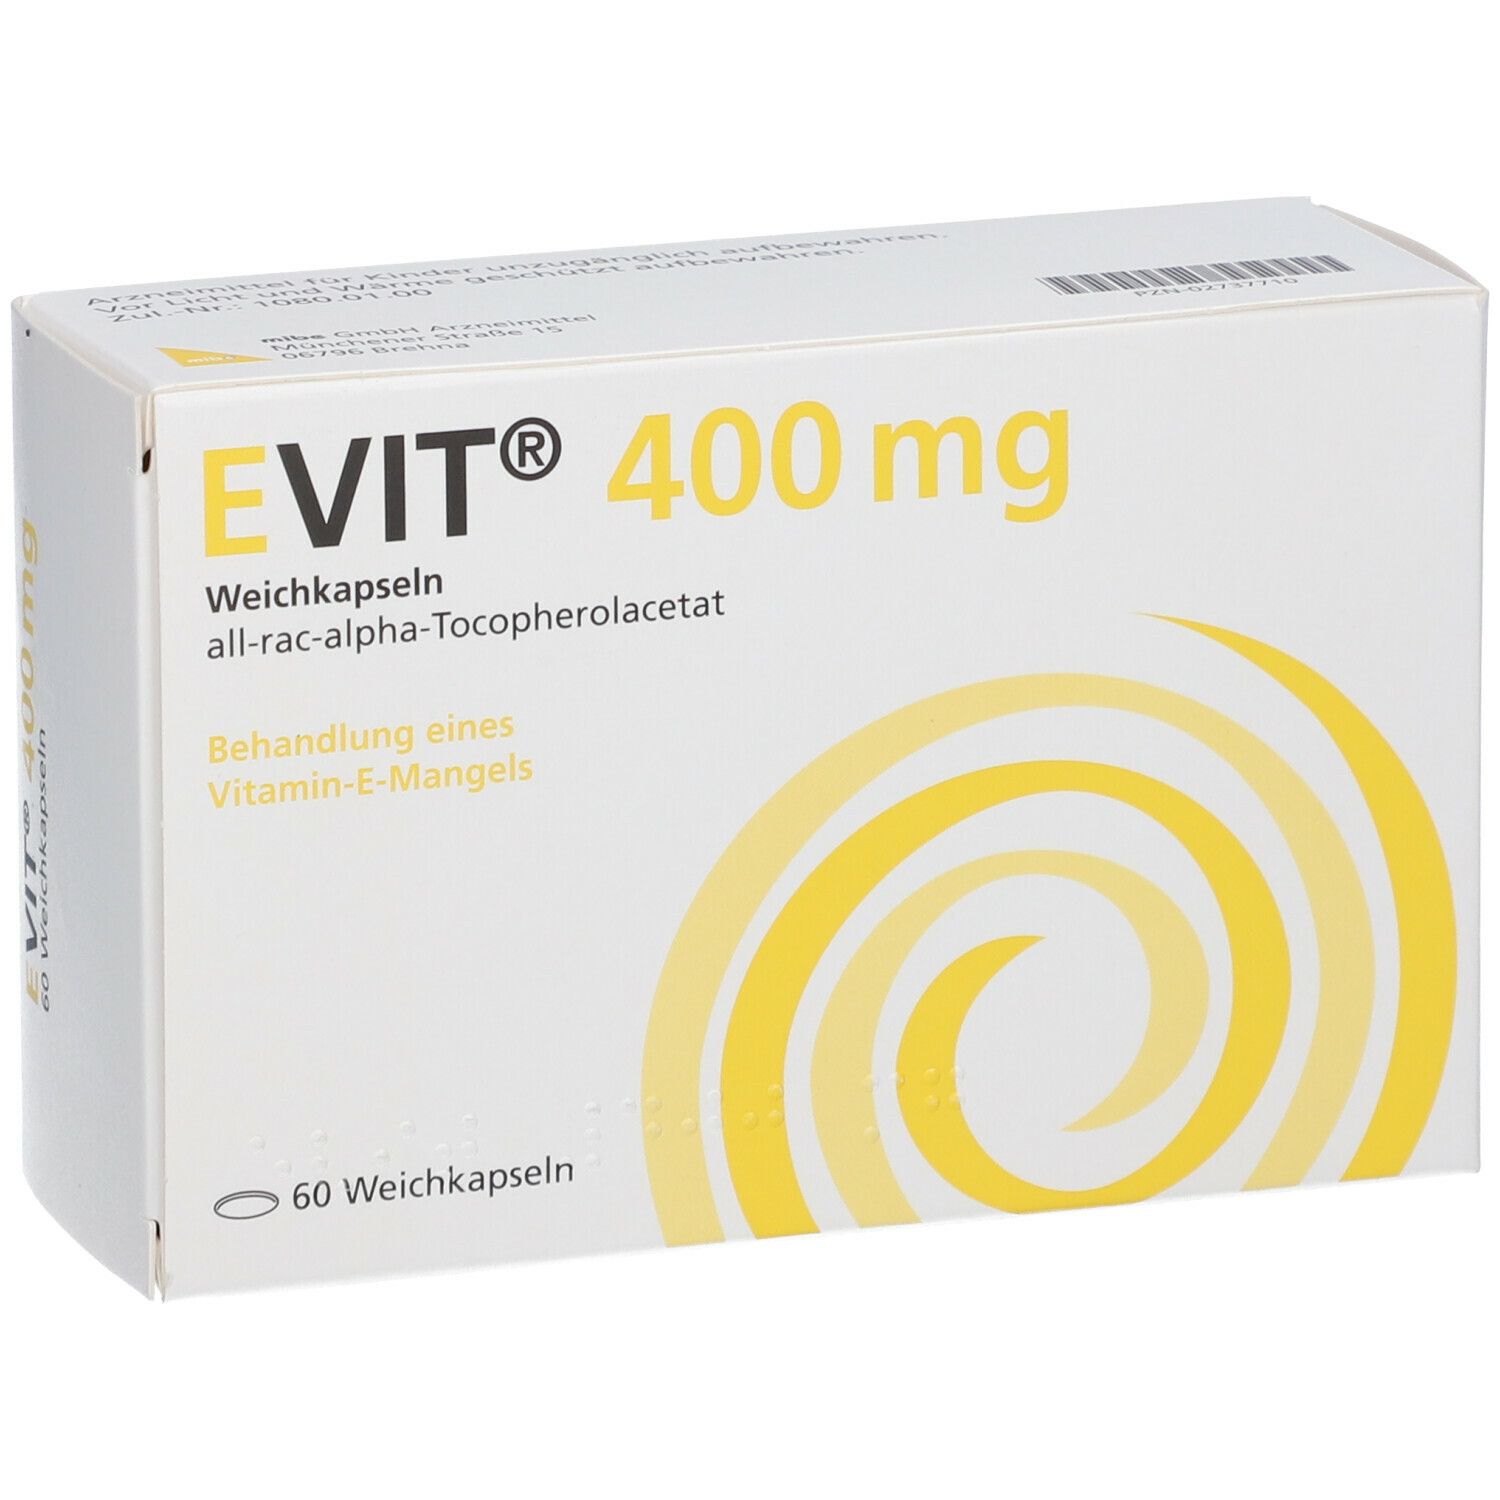 Evit 400 mg